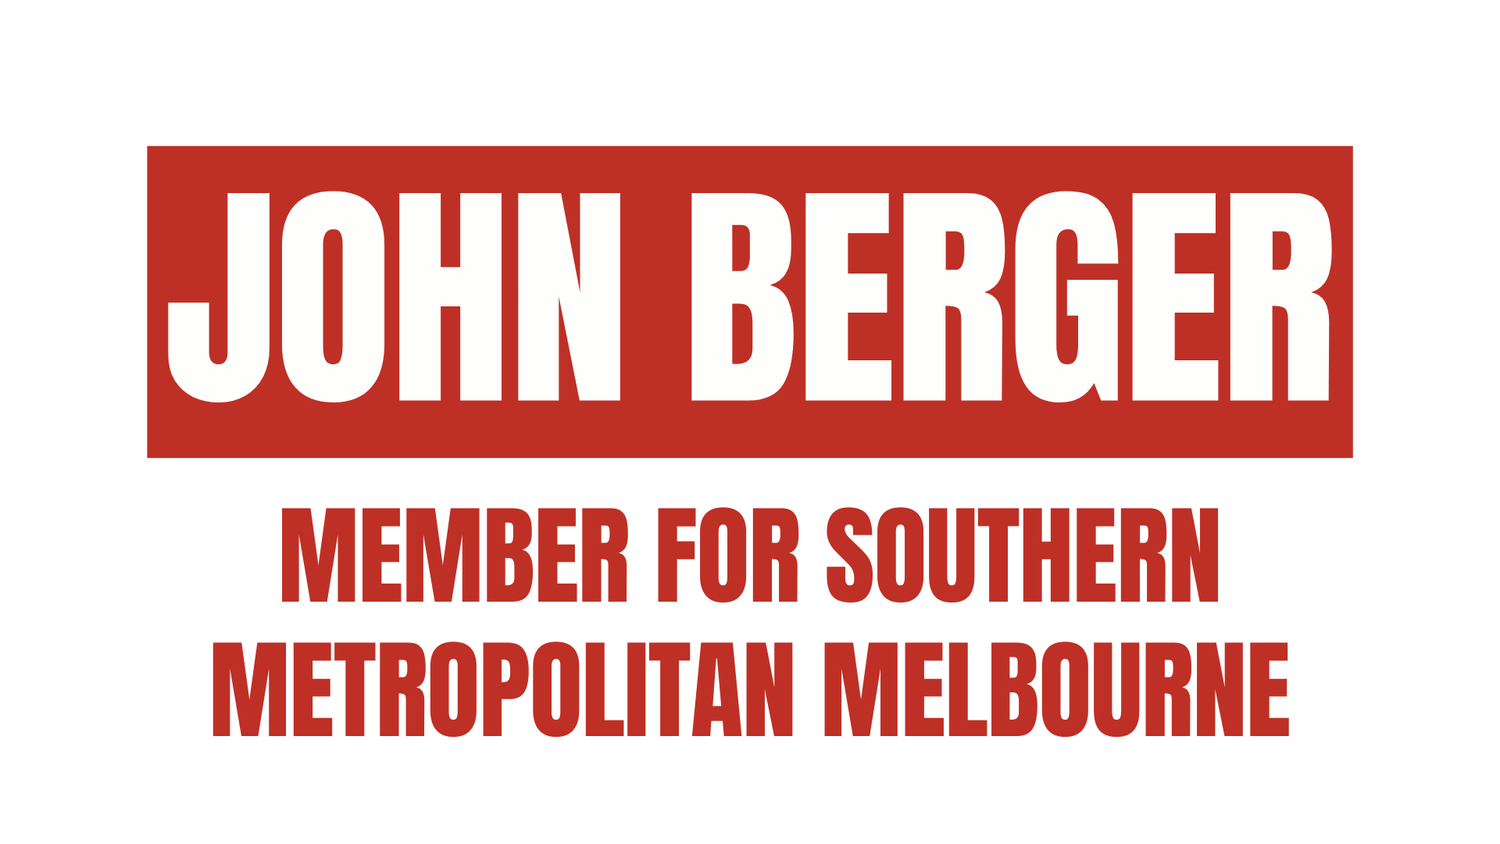 JOHN BERGER MP